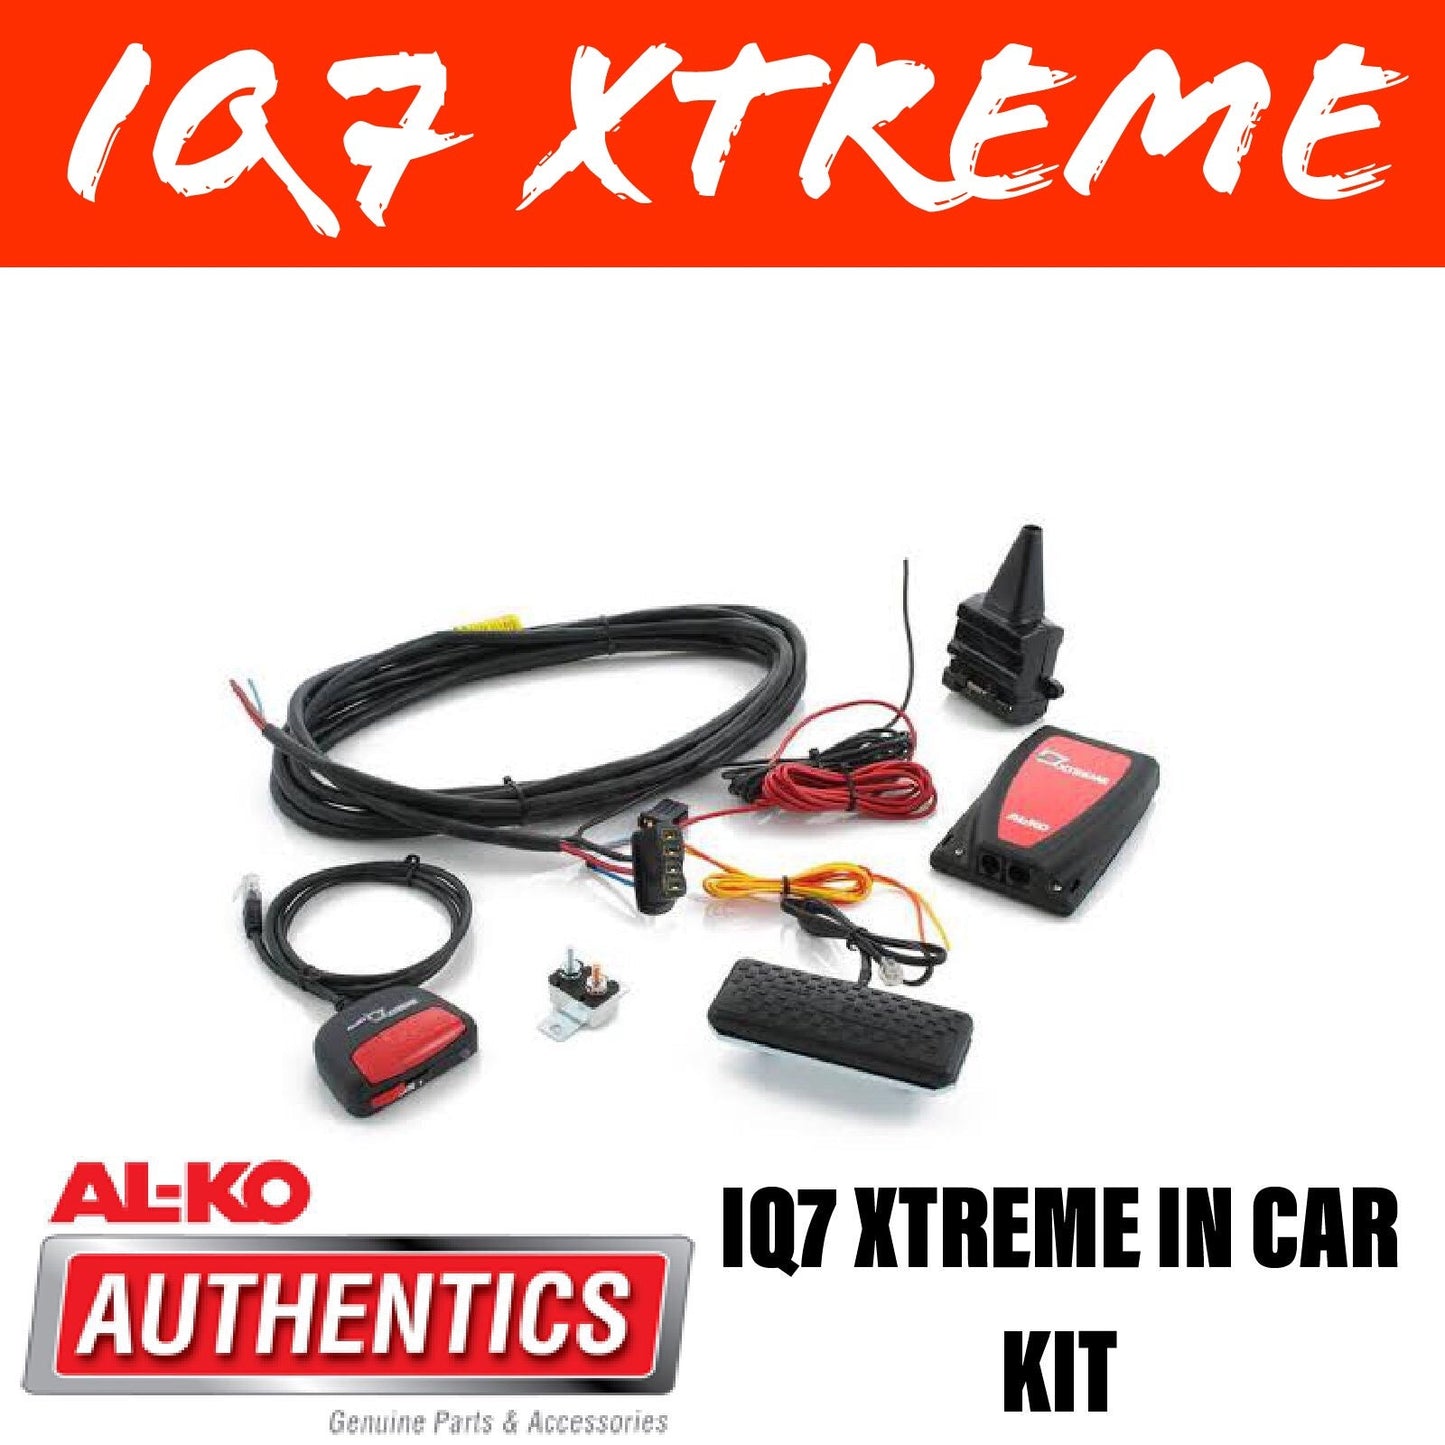 AL-KO IQ7 XTREME IN CAR KIT Automatic